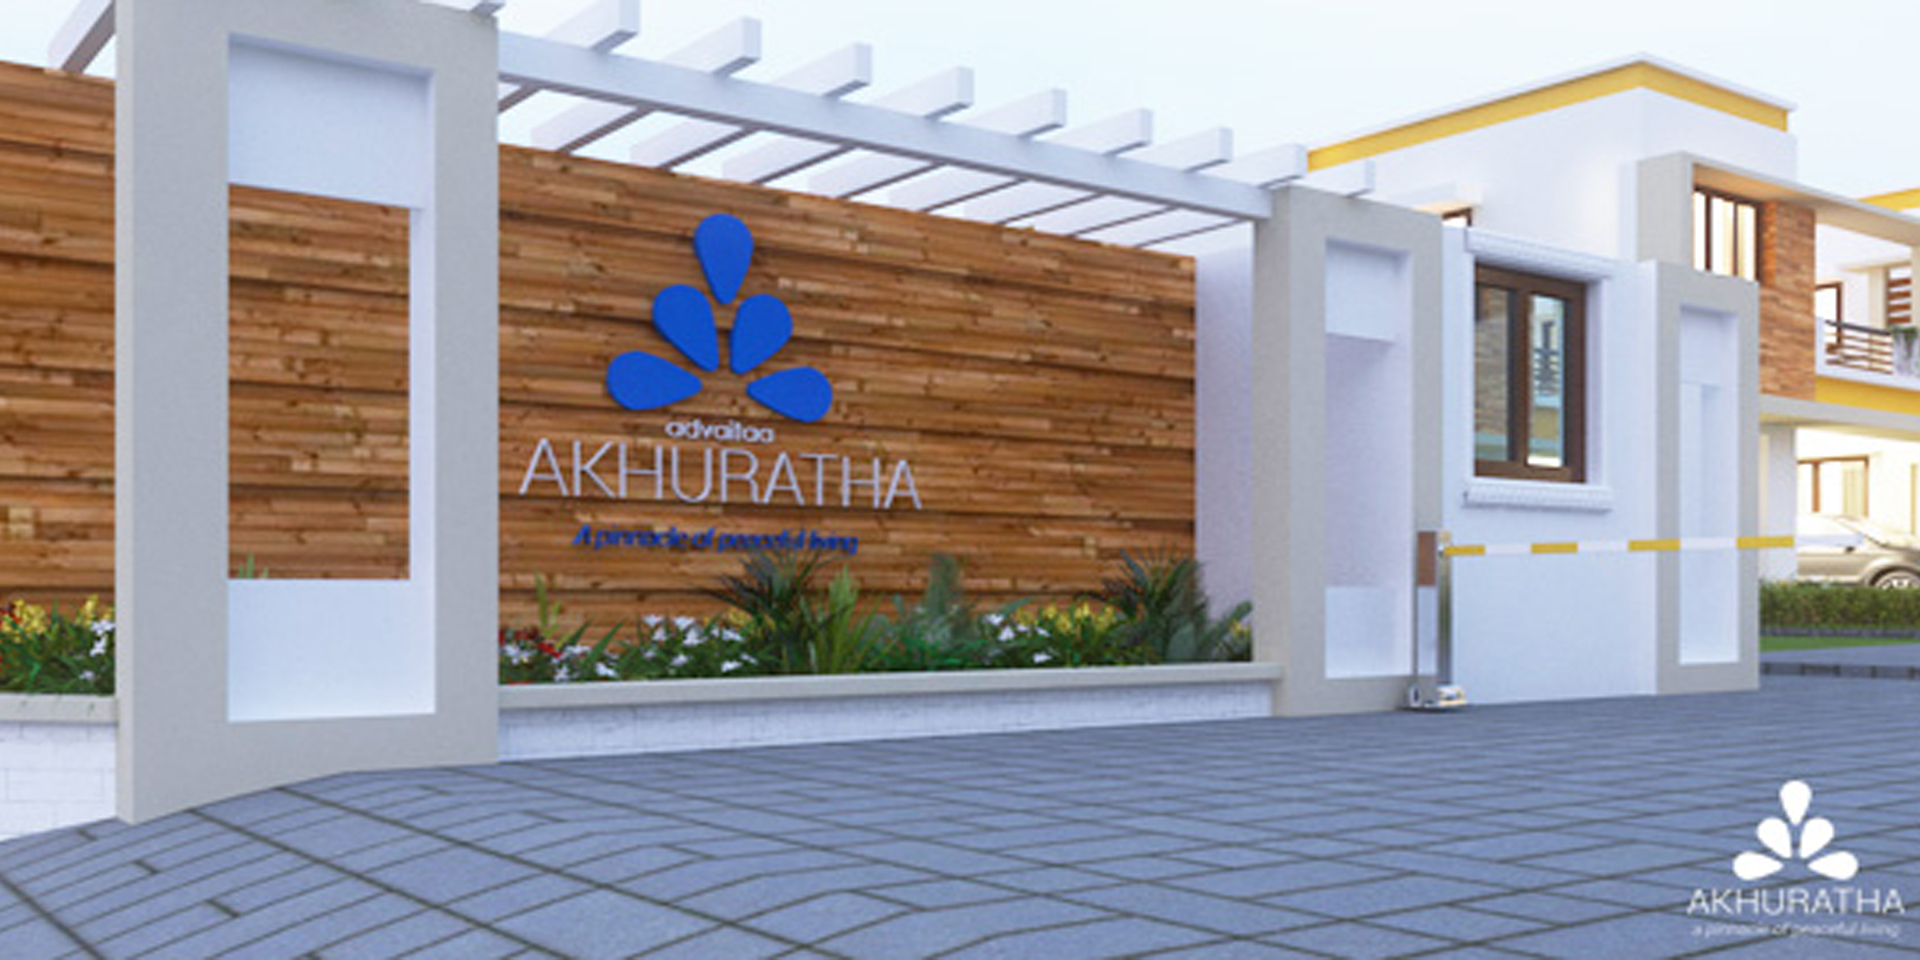 Advaitaa Akhuratha